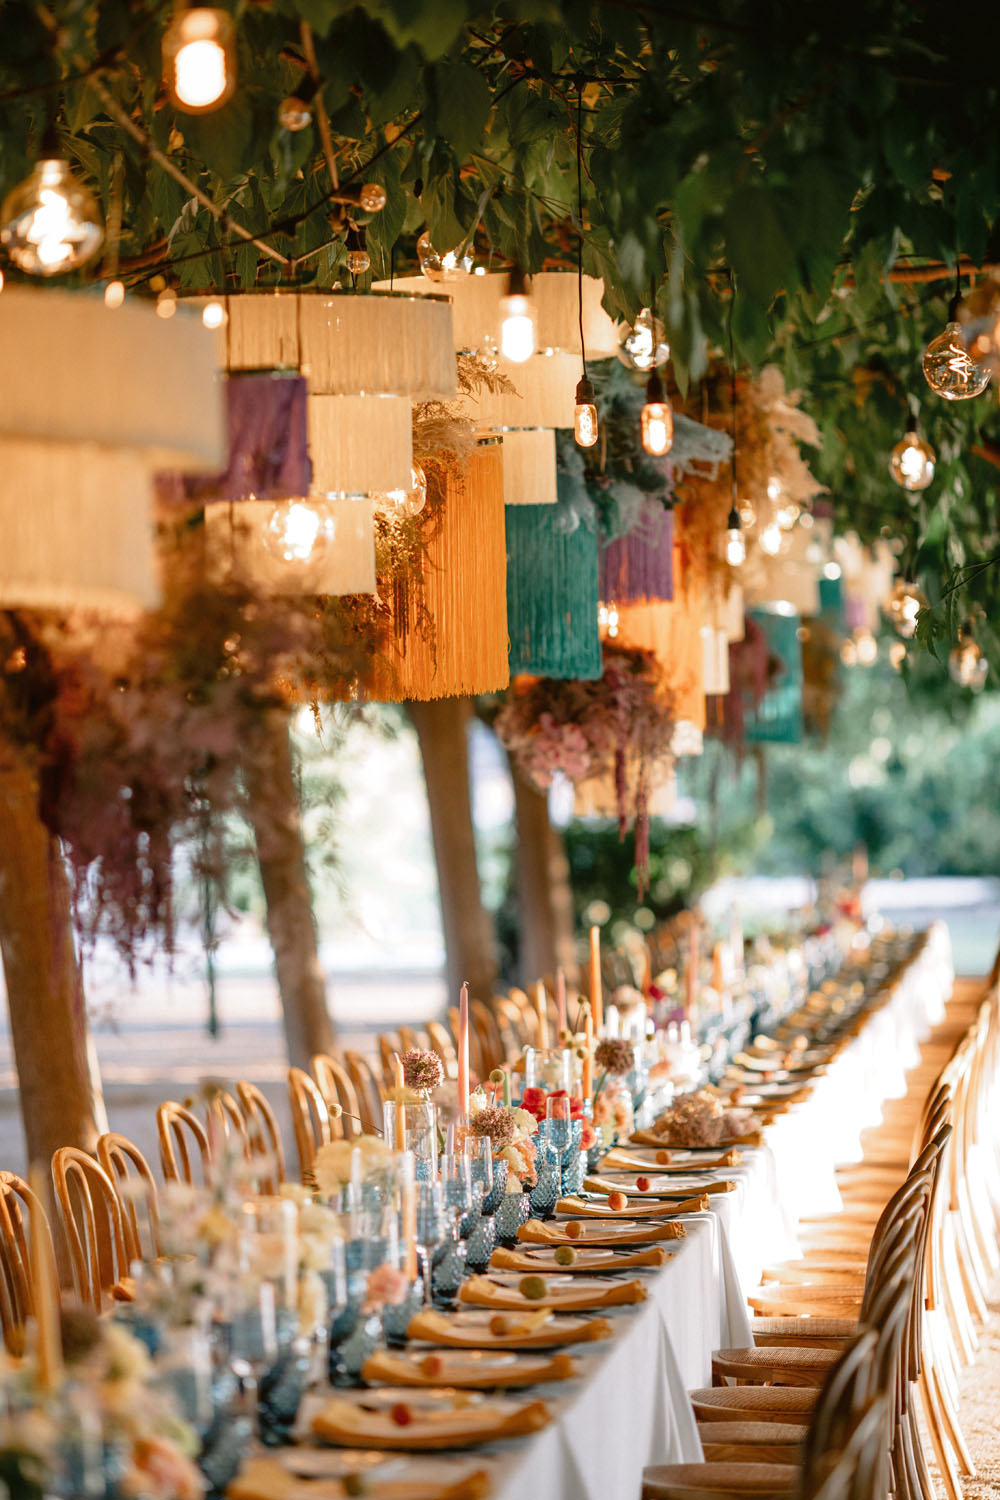 Creative, colorful wedding in Alicante, Spain